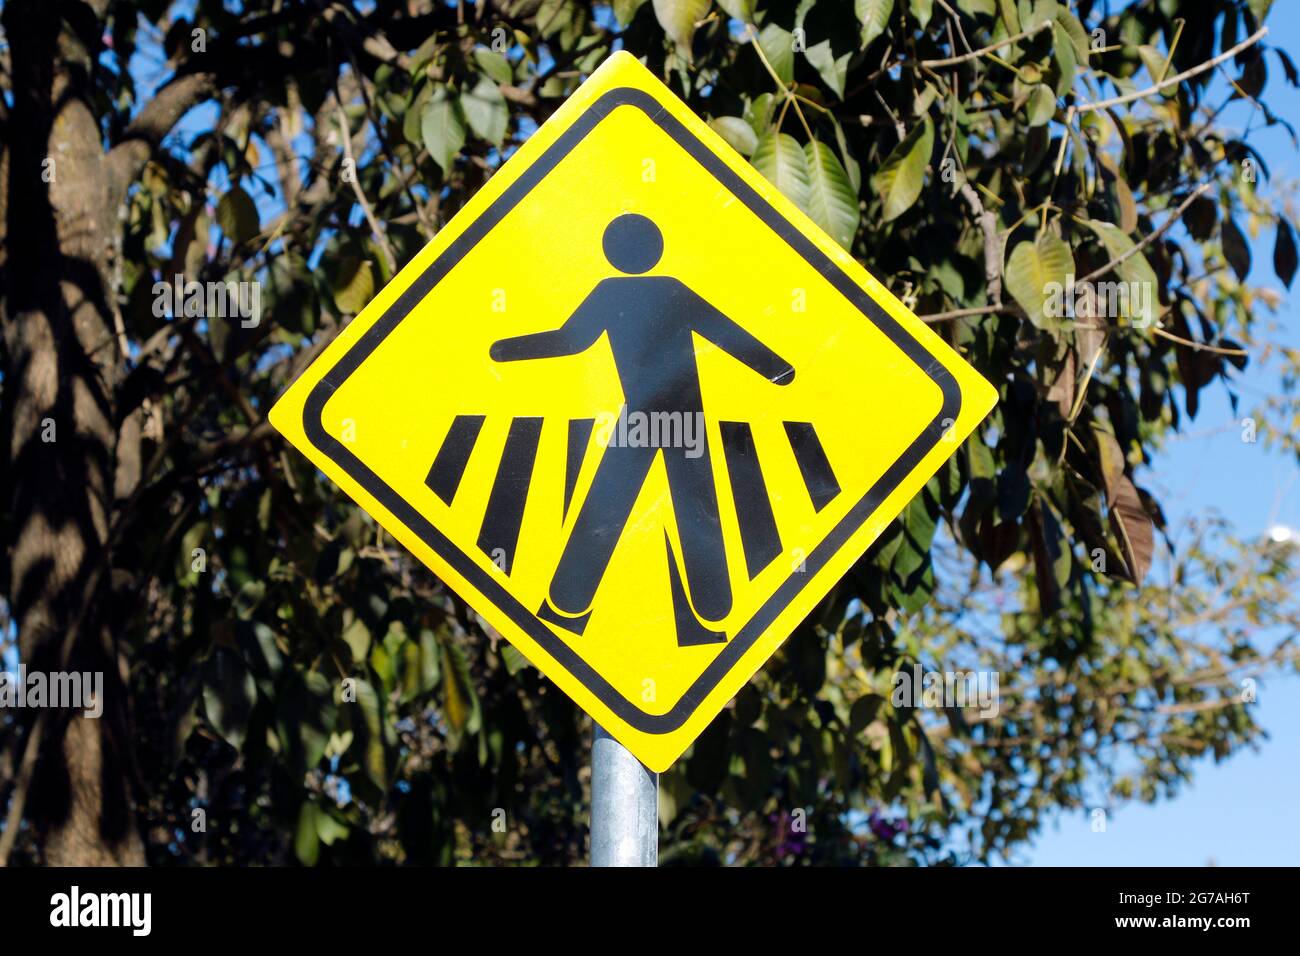 pedestrian crossing - yellow traffic sign signaling crosswalk Stock Photo